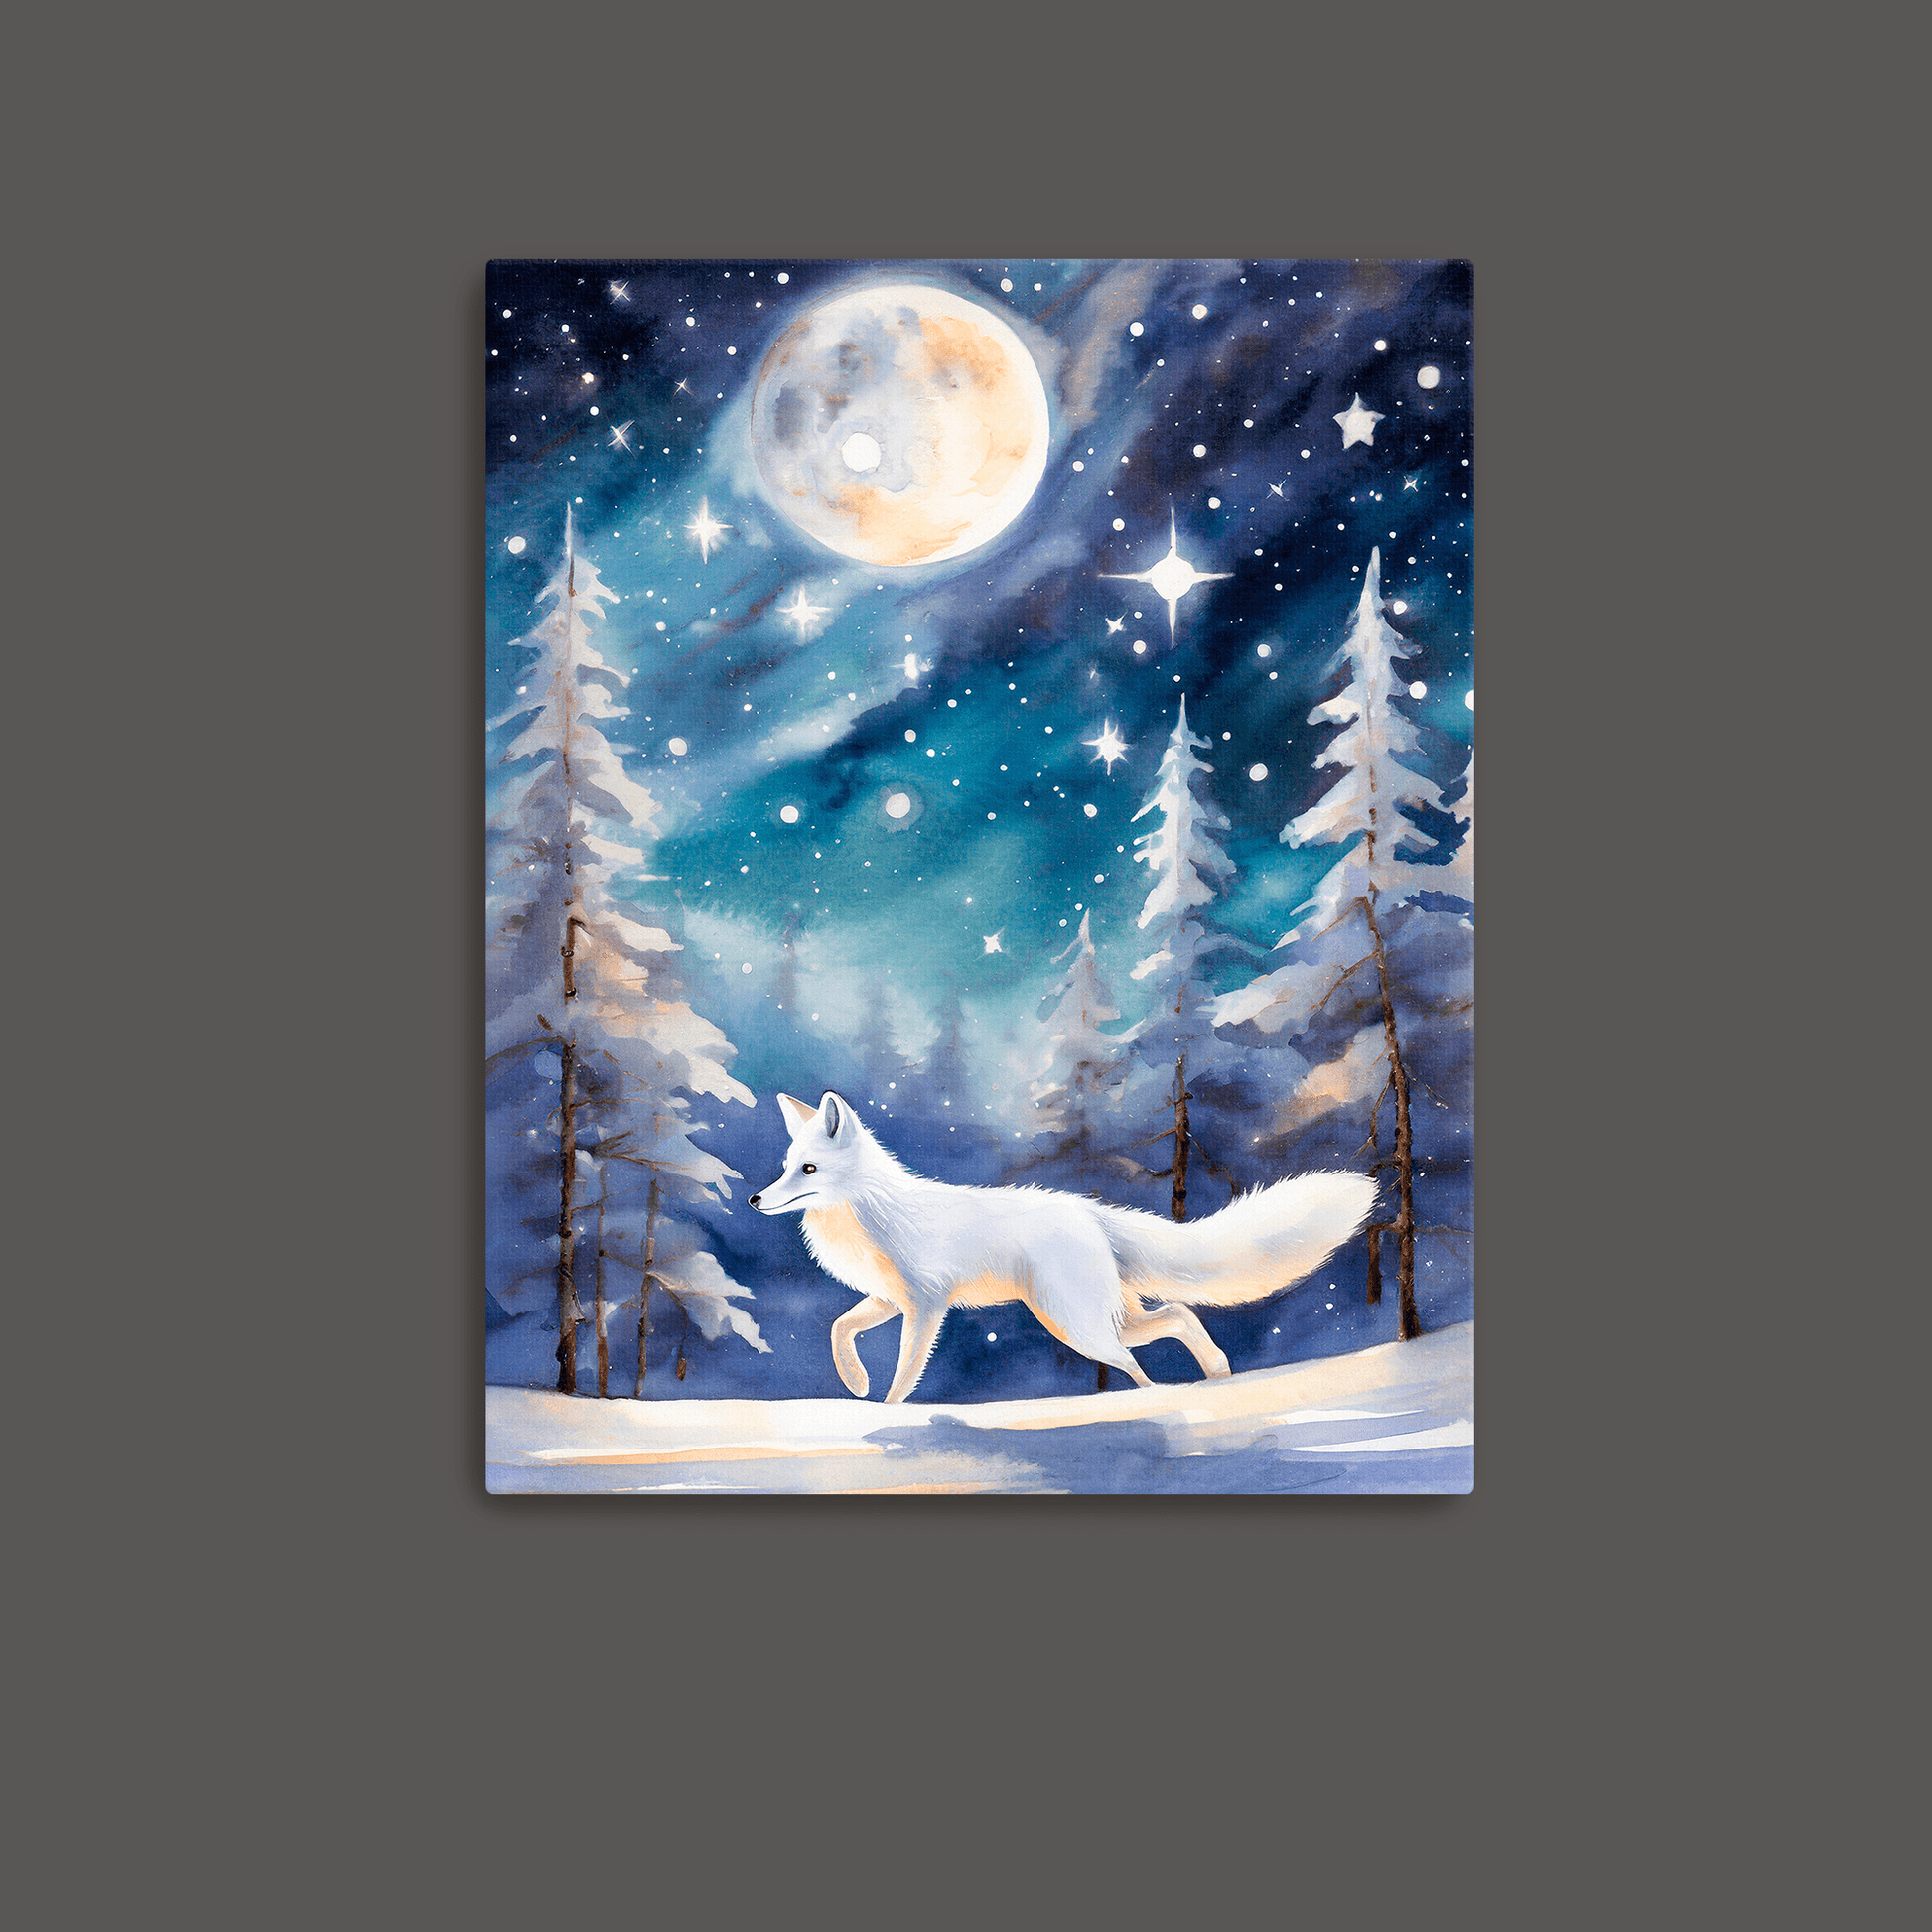 Snow Fox On a Winter Night - Metal Poster - Premium Metal Poster